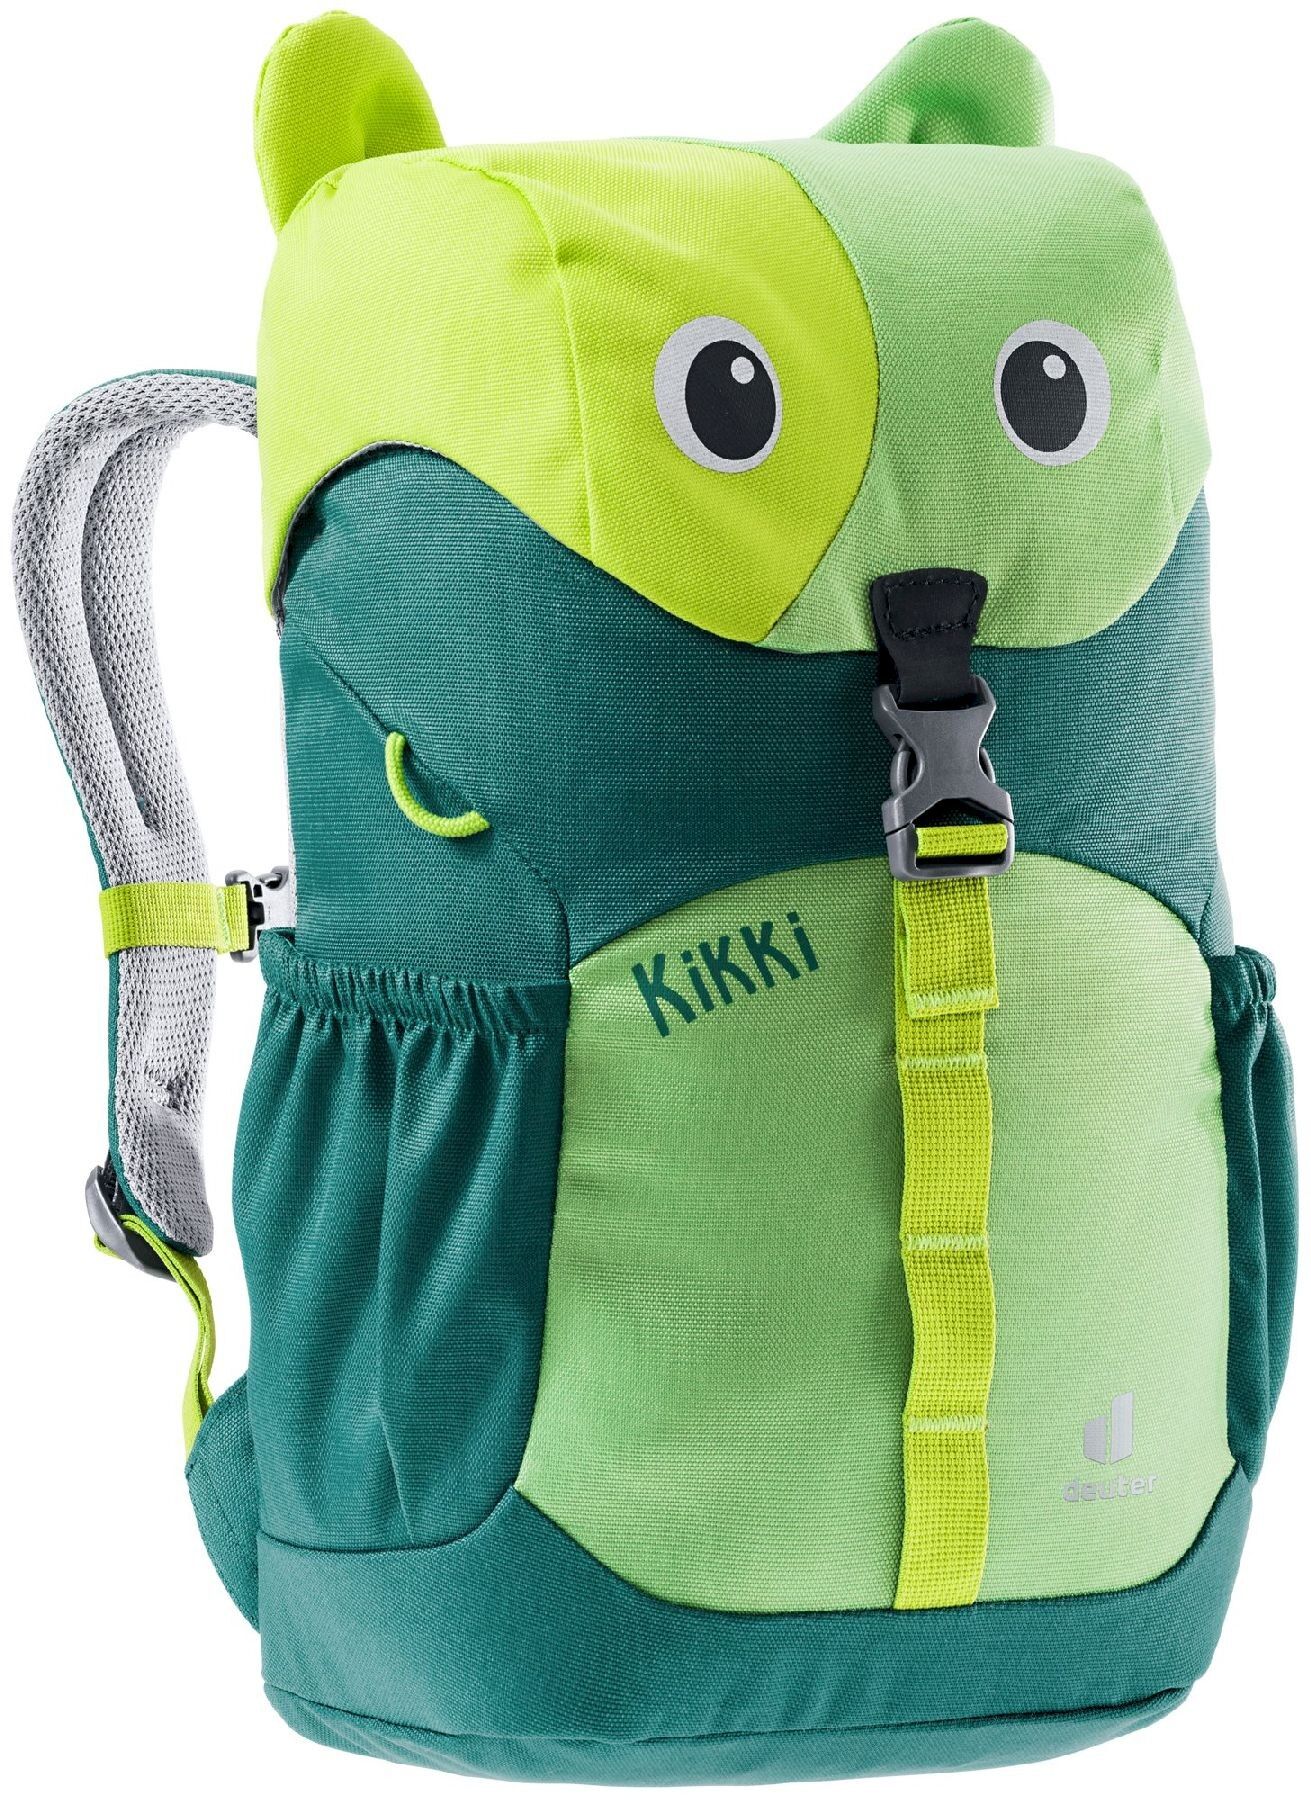 Deuter Kikki - Walking backpack - Kids